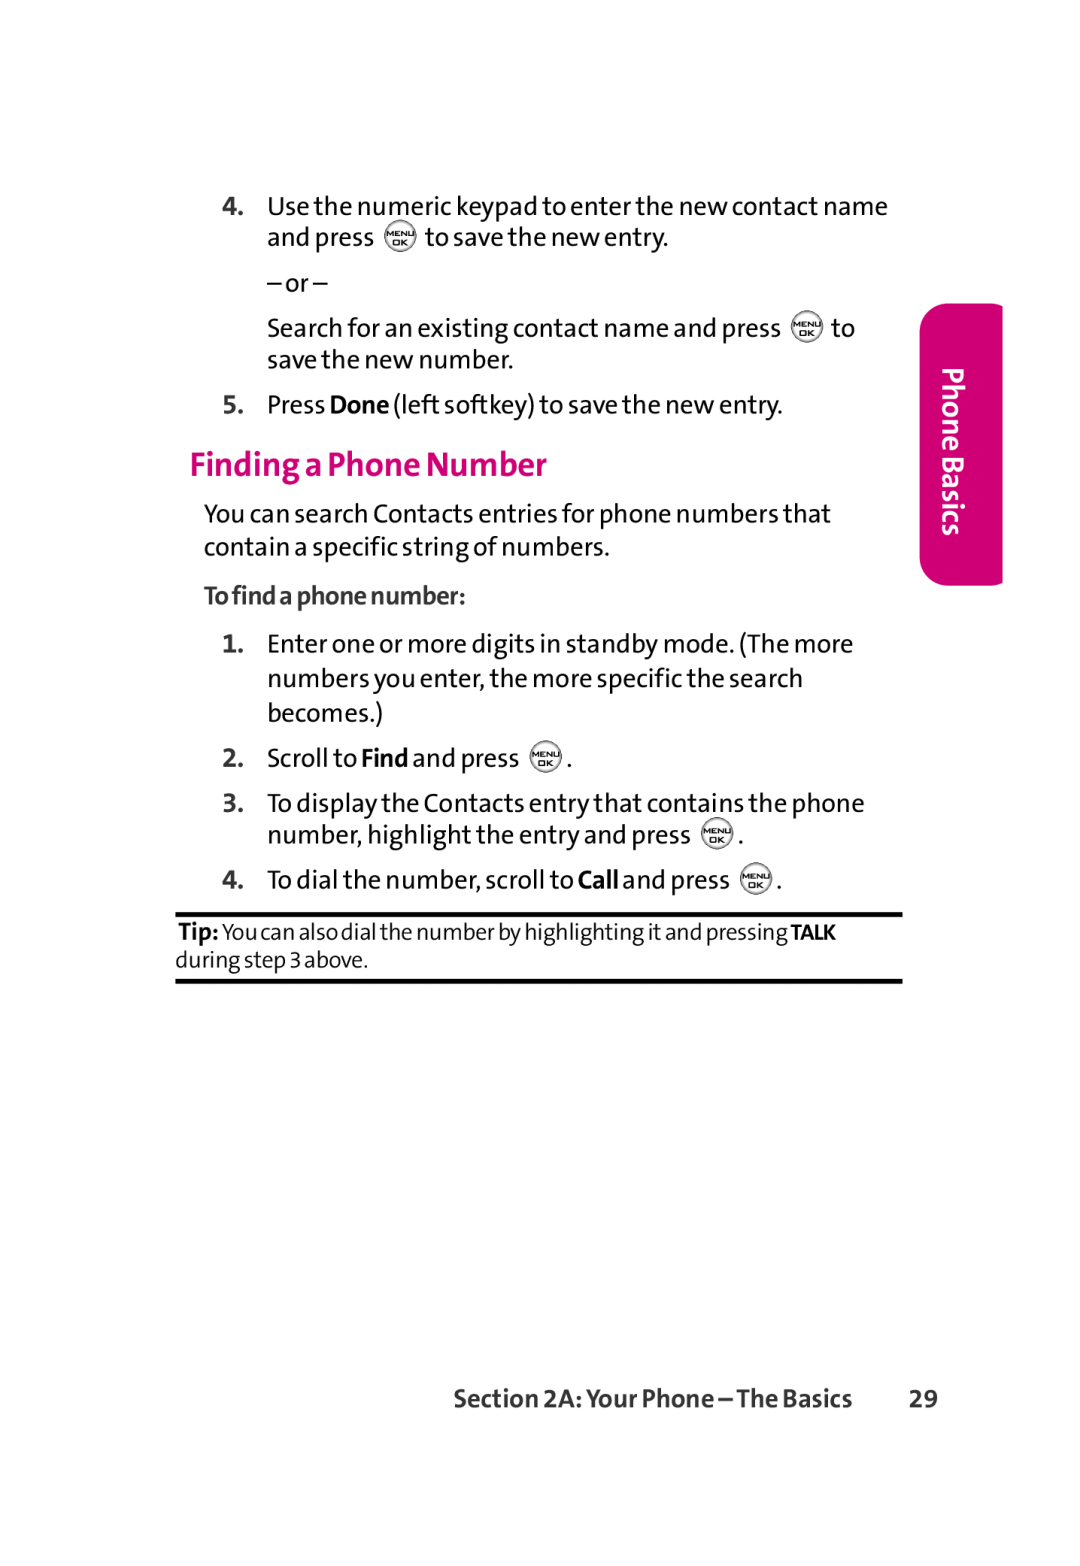 LG Electronics 350 manual Finding a Phone Number, Tofindaphonenumber, Phone Basics 